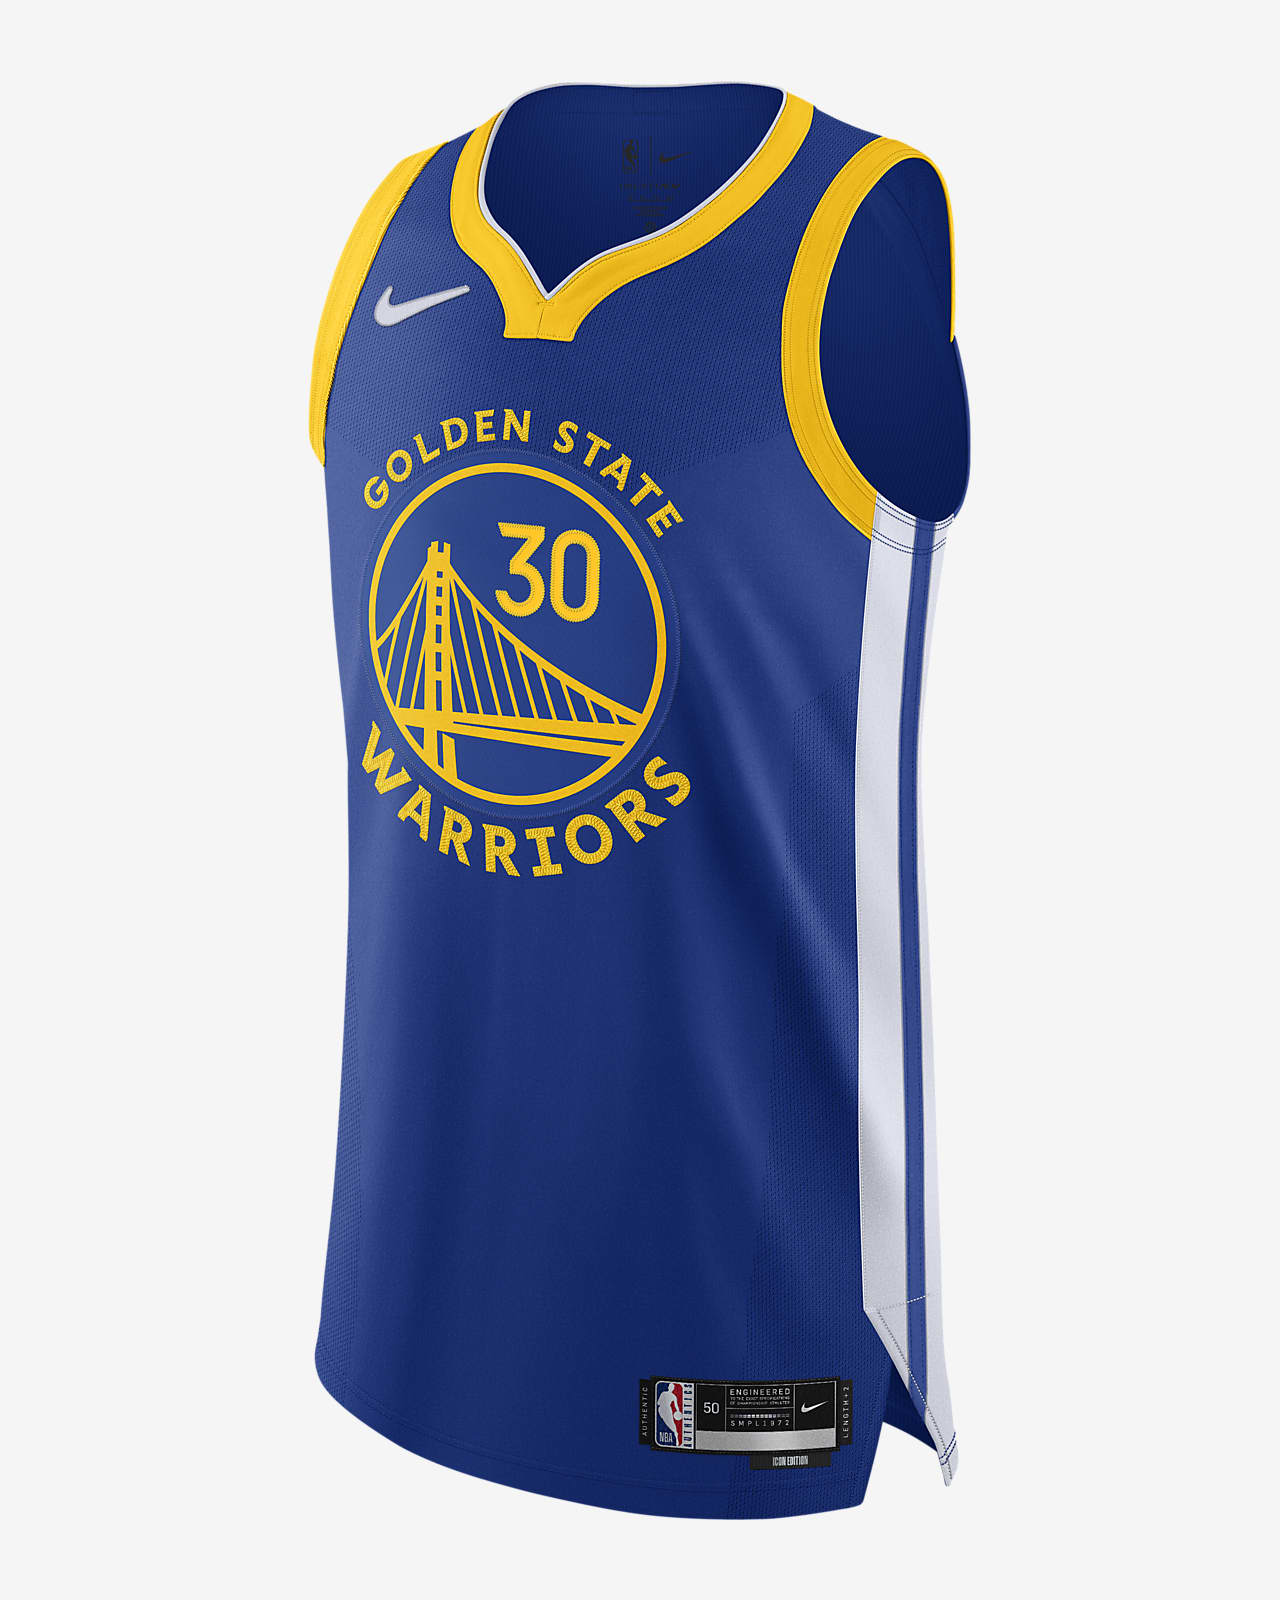 Acuario estómago Abrazadera Camiseta Nike NBA Authentic Stephen Curry Warriors Icon Edition 2020.  Nike.com